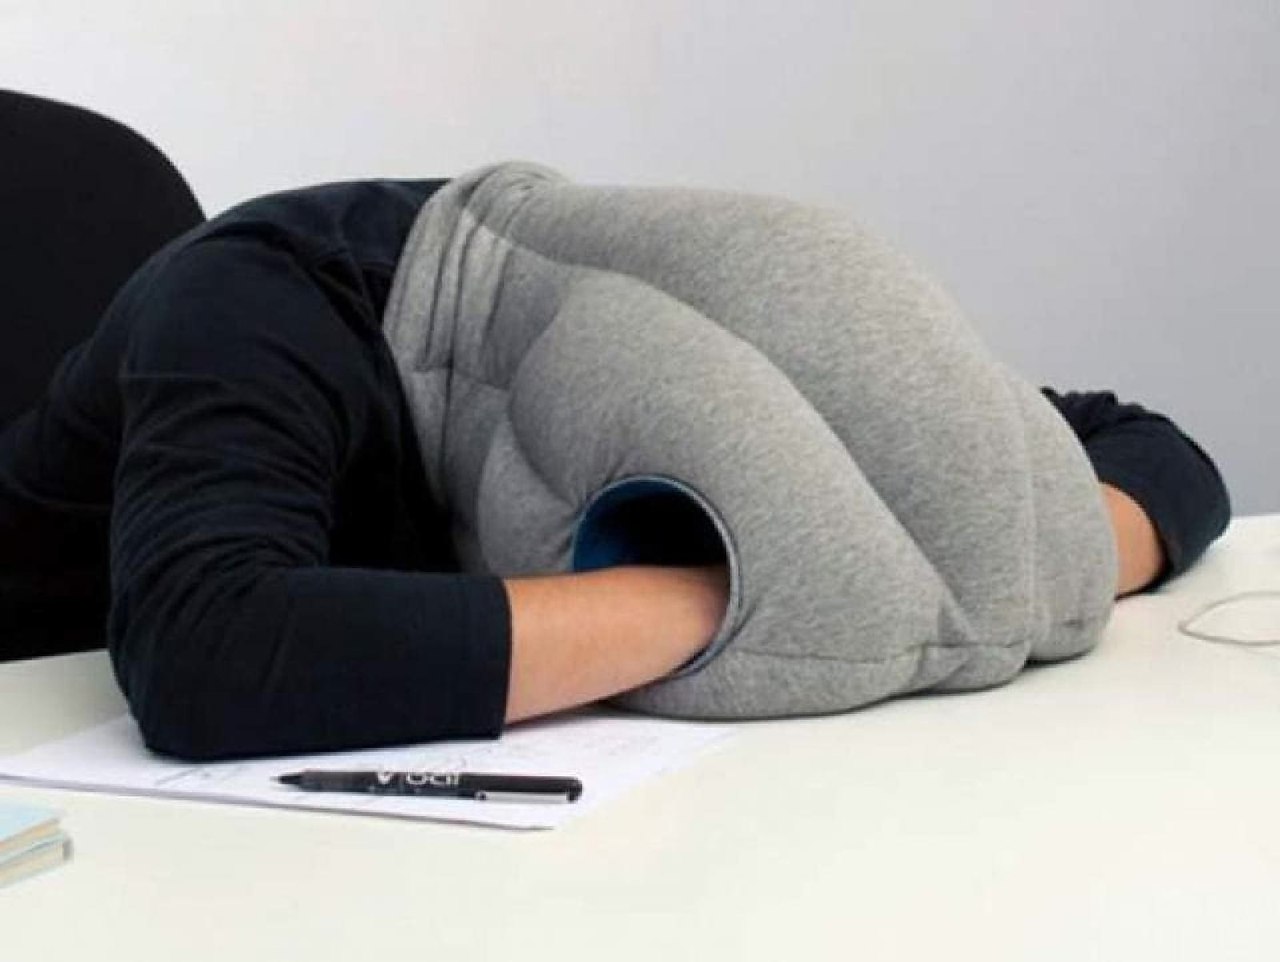 подушка для офиса на стуле